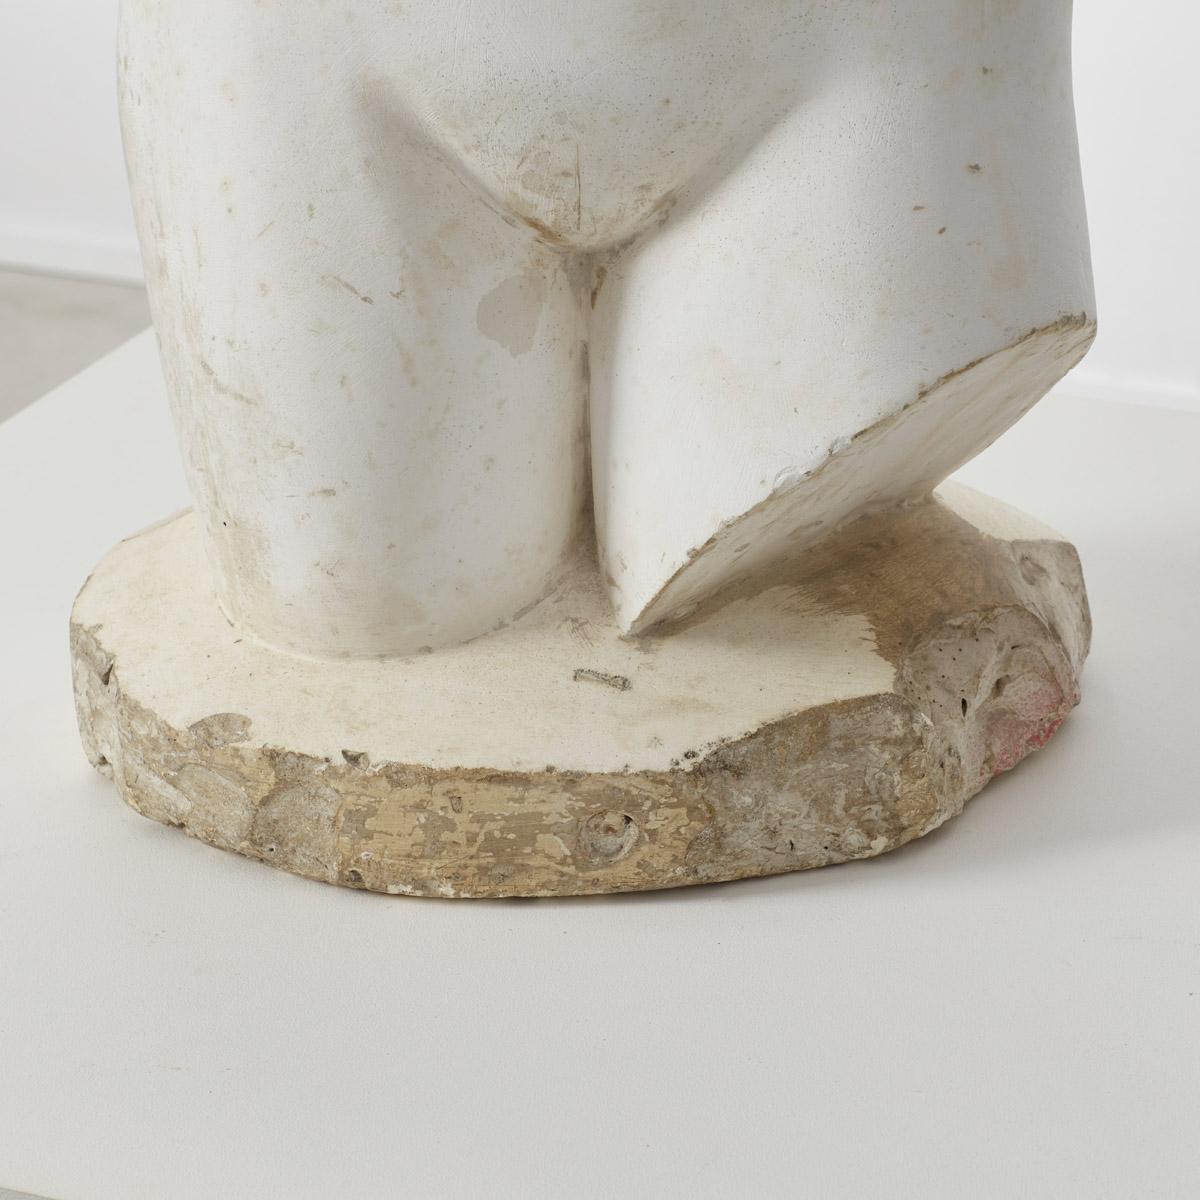 Plaster 20th century British museum plaster cast of classical bust